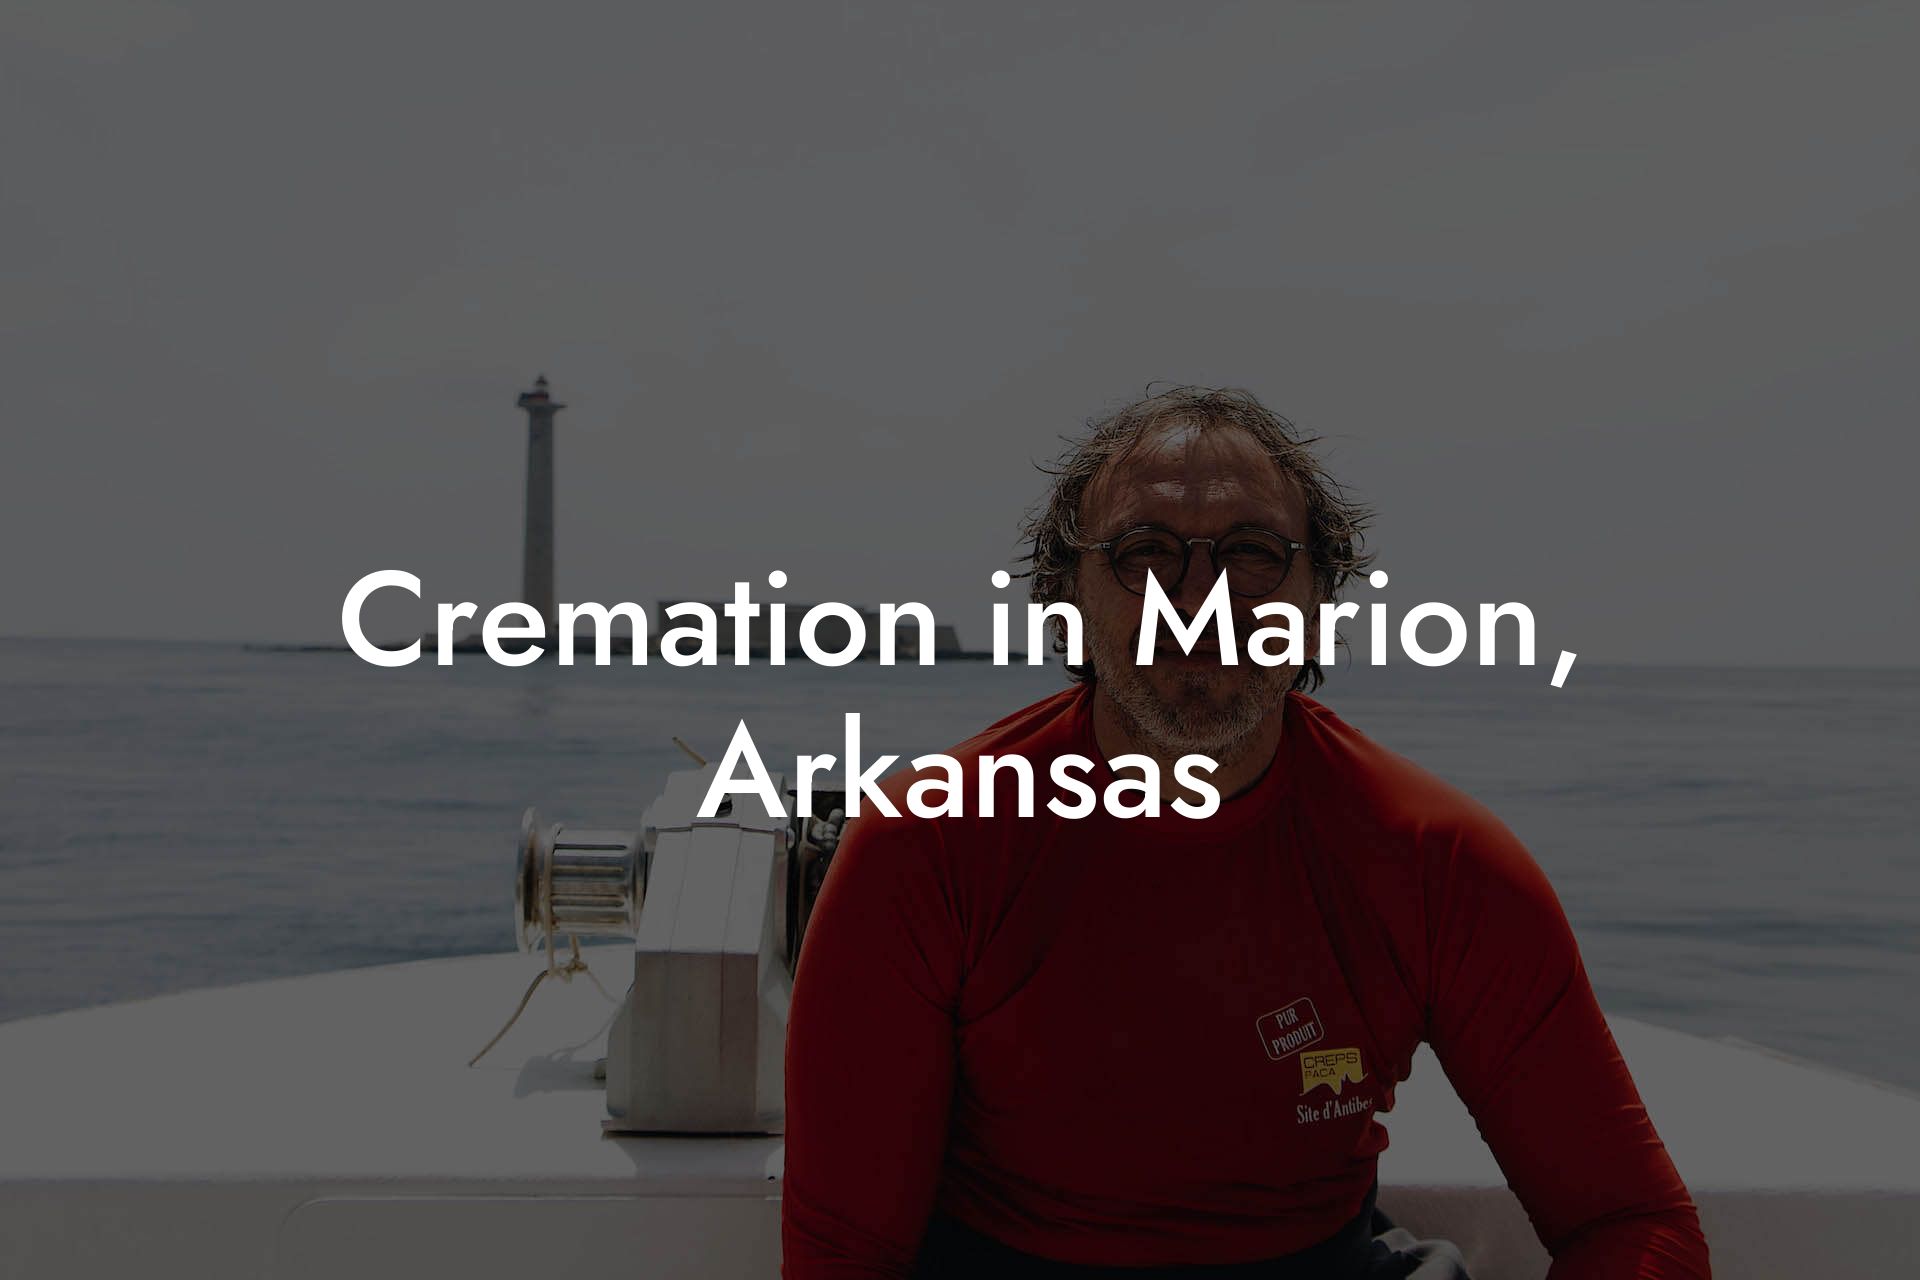 Cremation in Marion, Arkansas